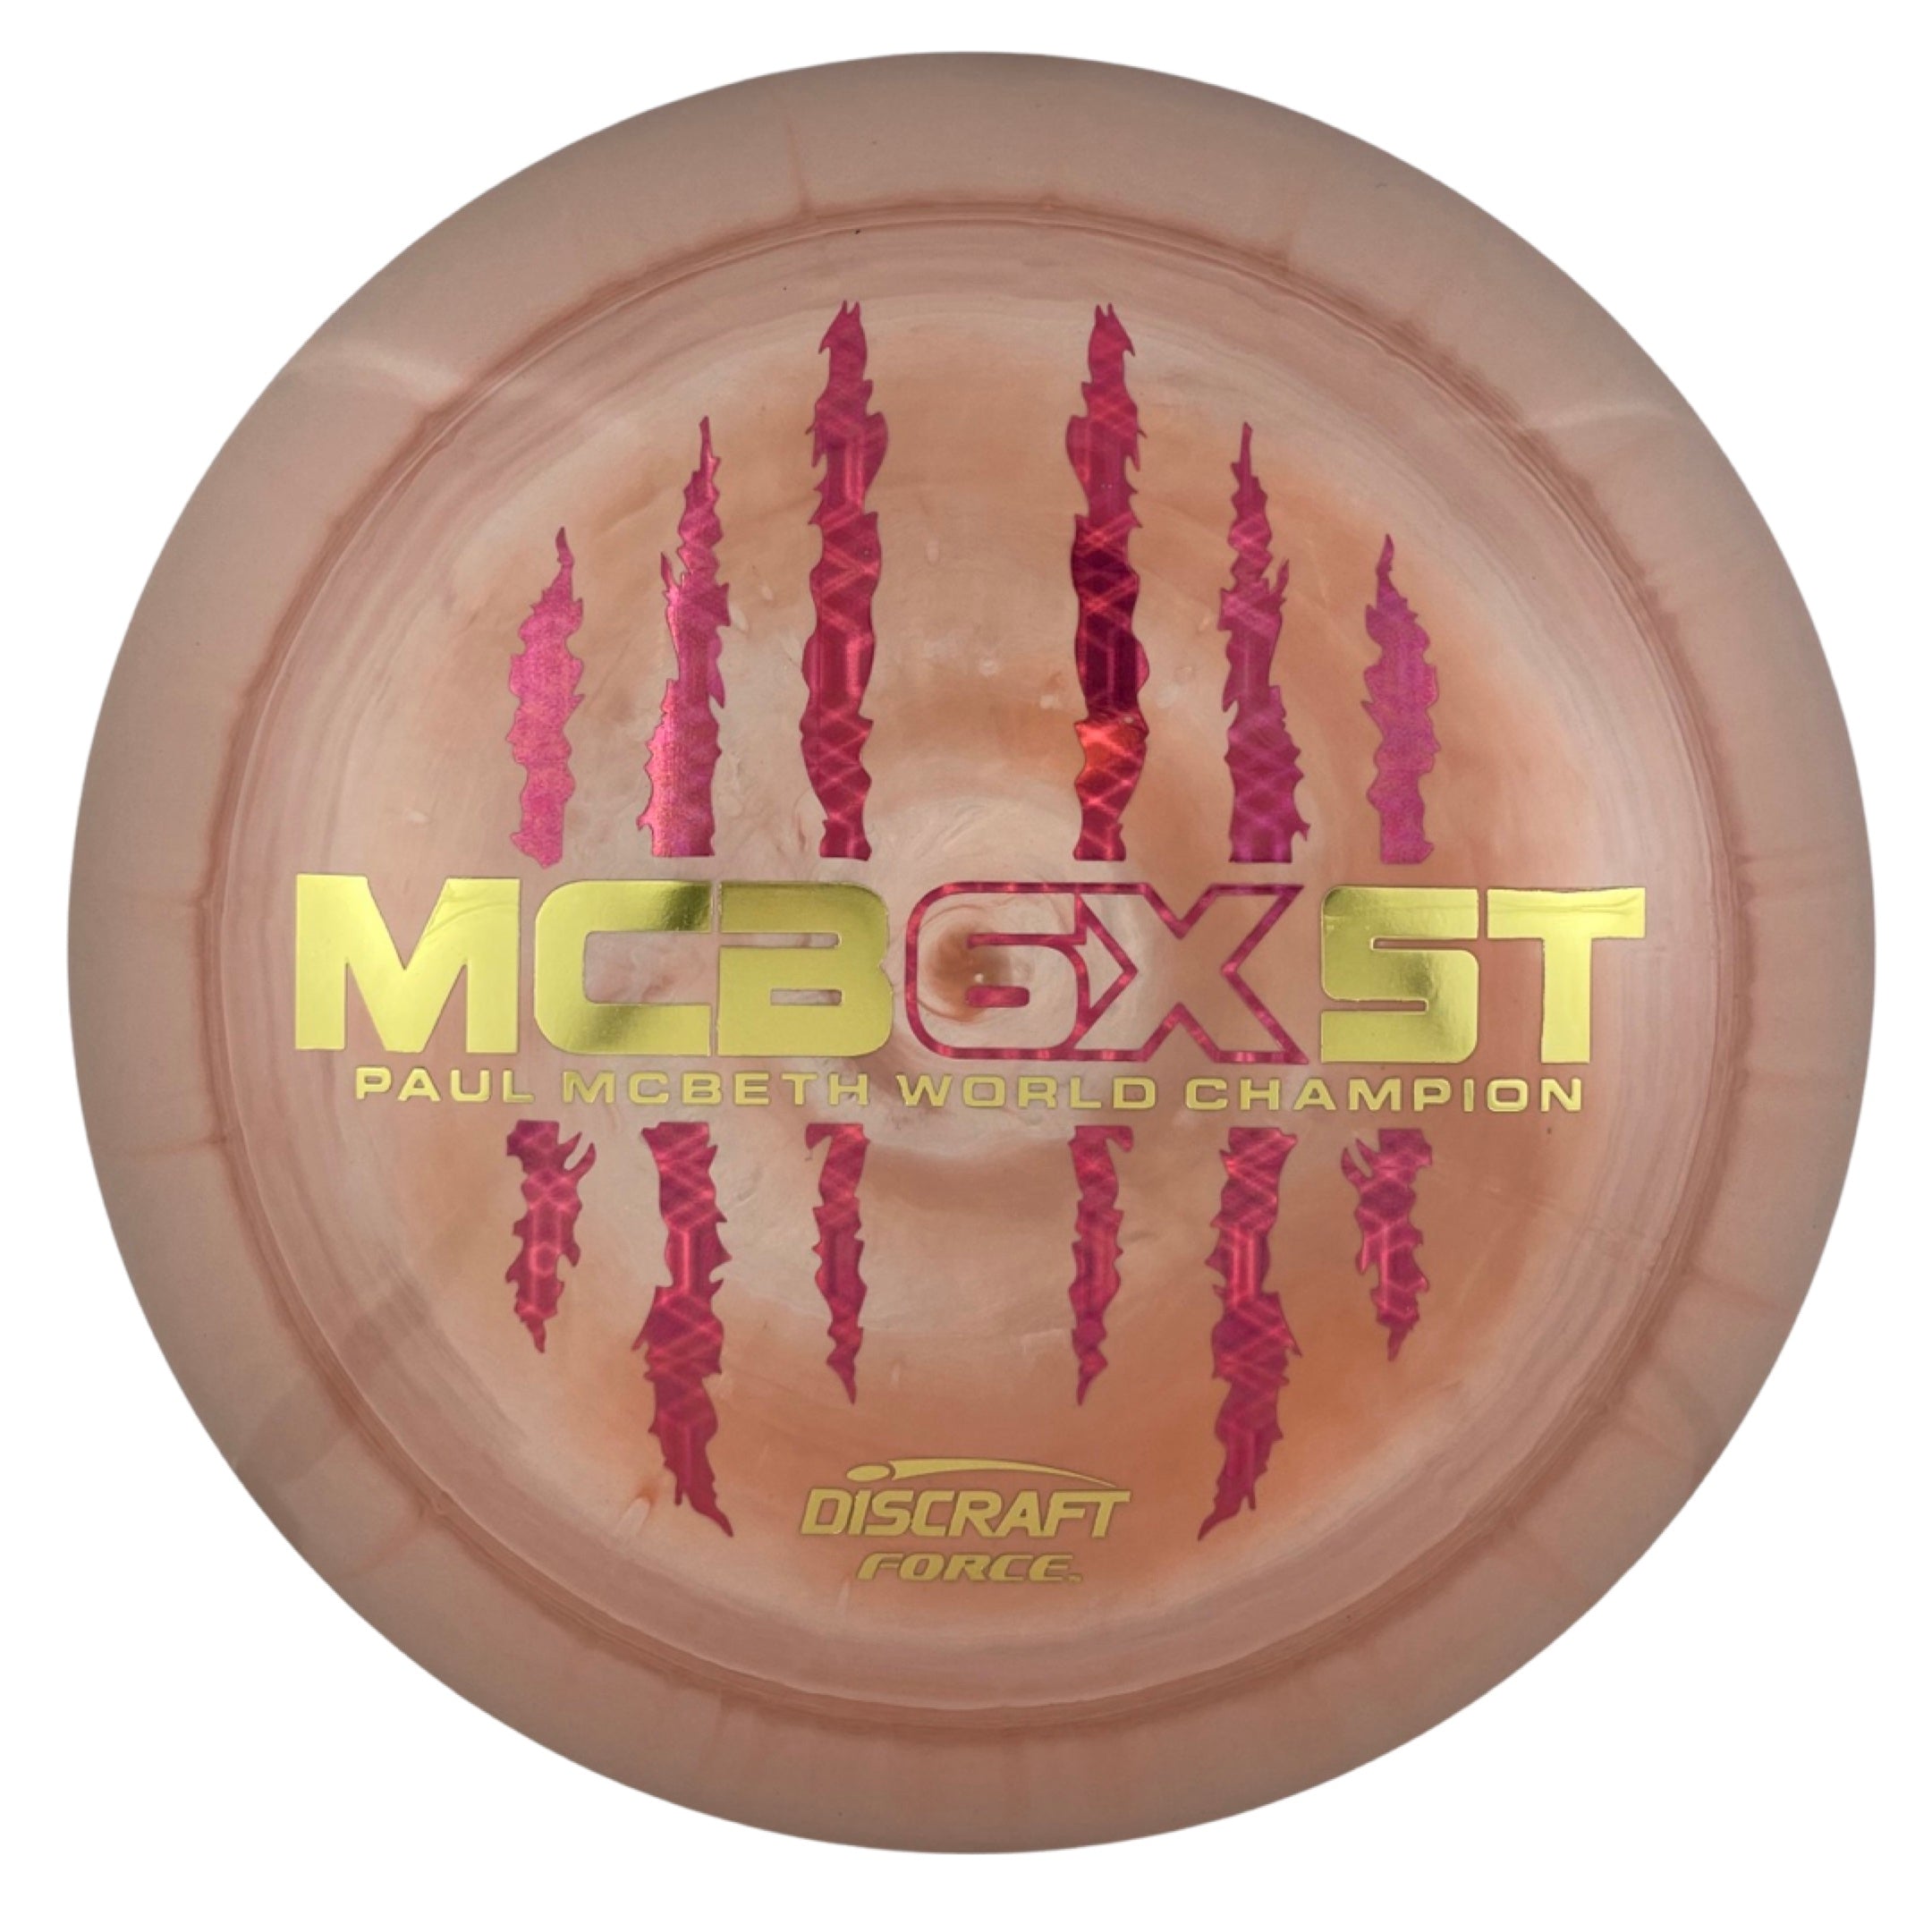 Discraft Force - Paul McBeth 6X McBeast ESP